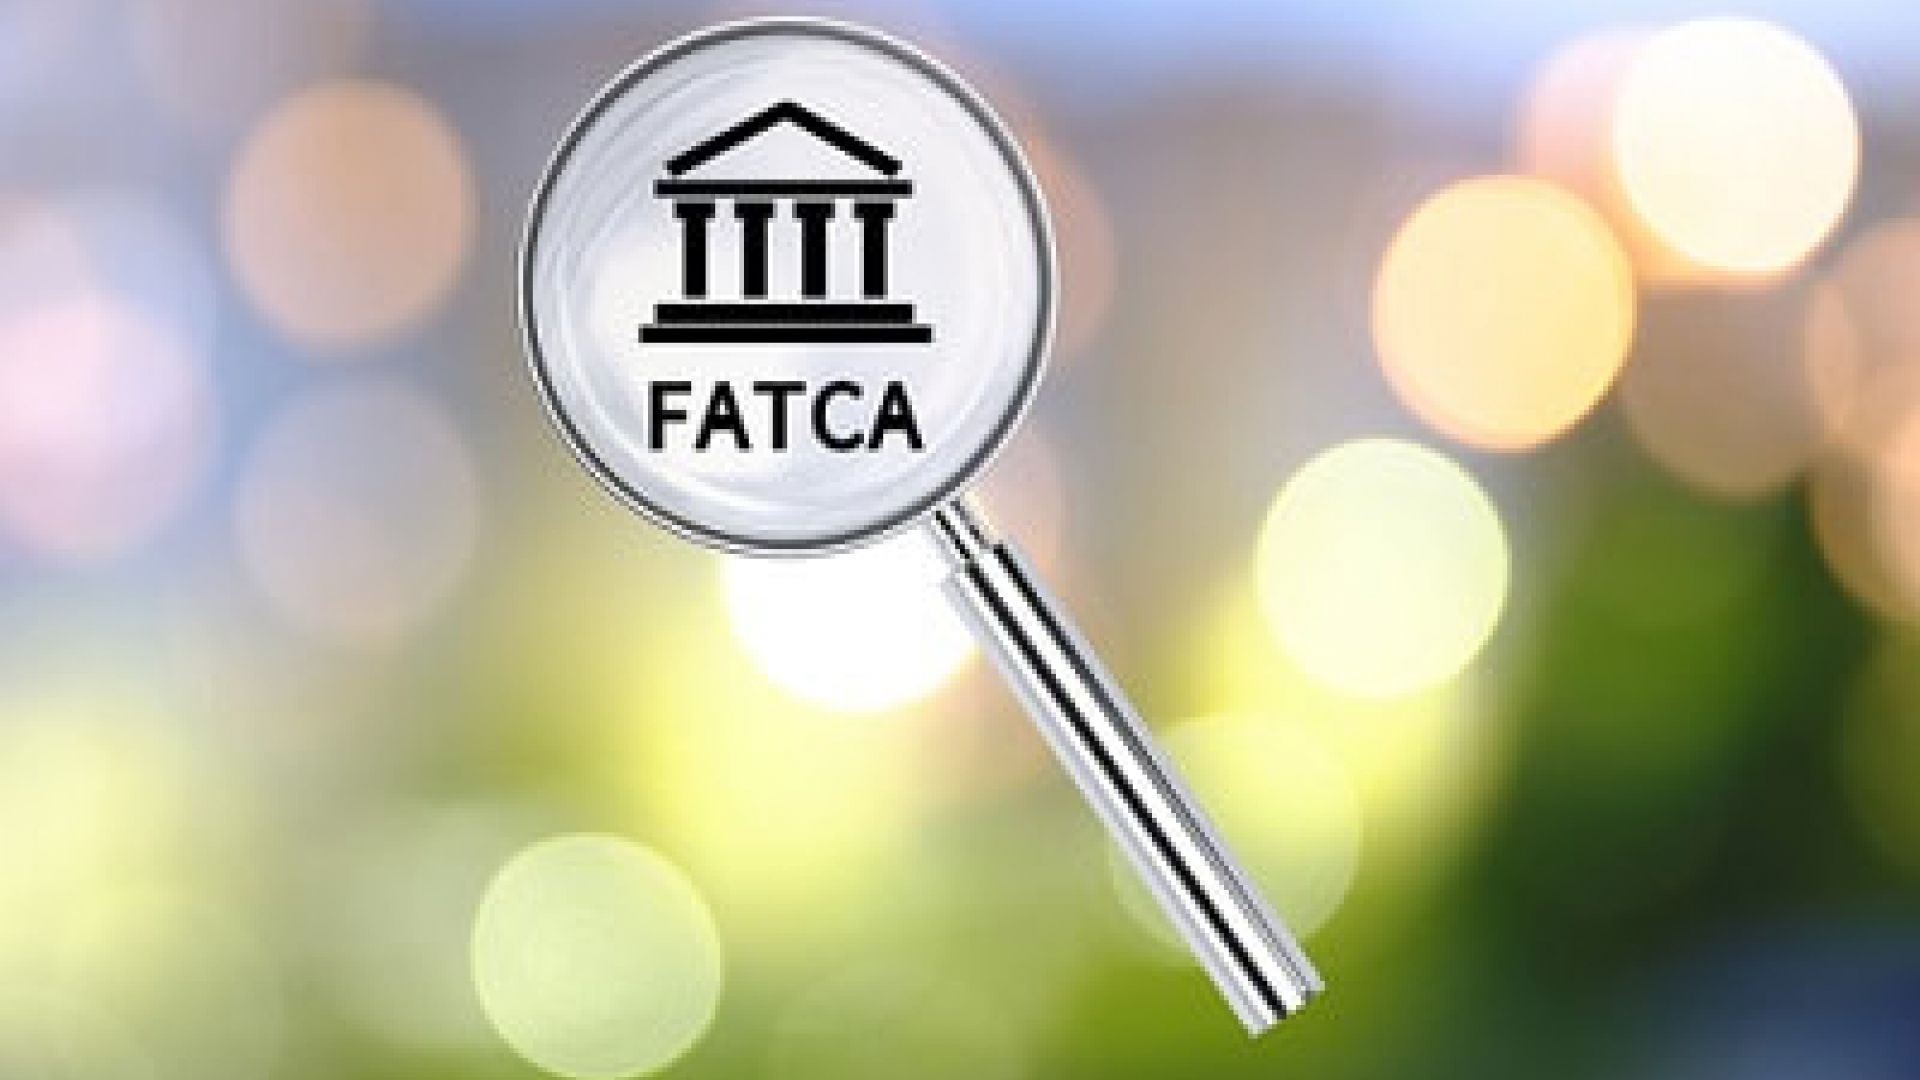 FATCA foreign account tax compliance act USA